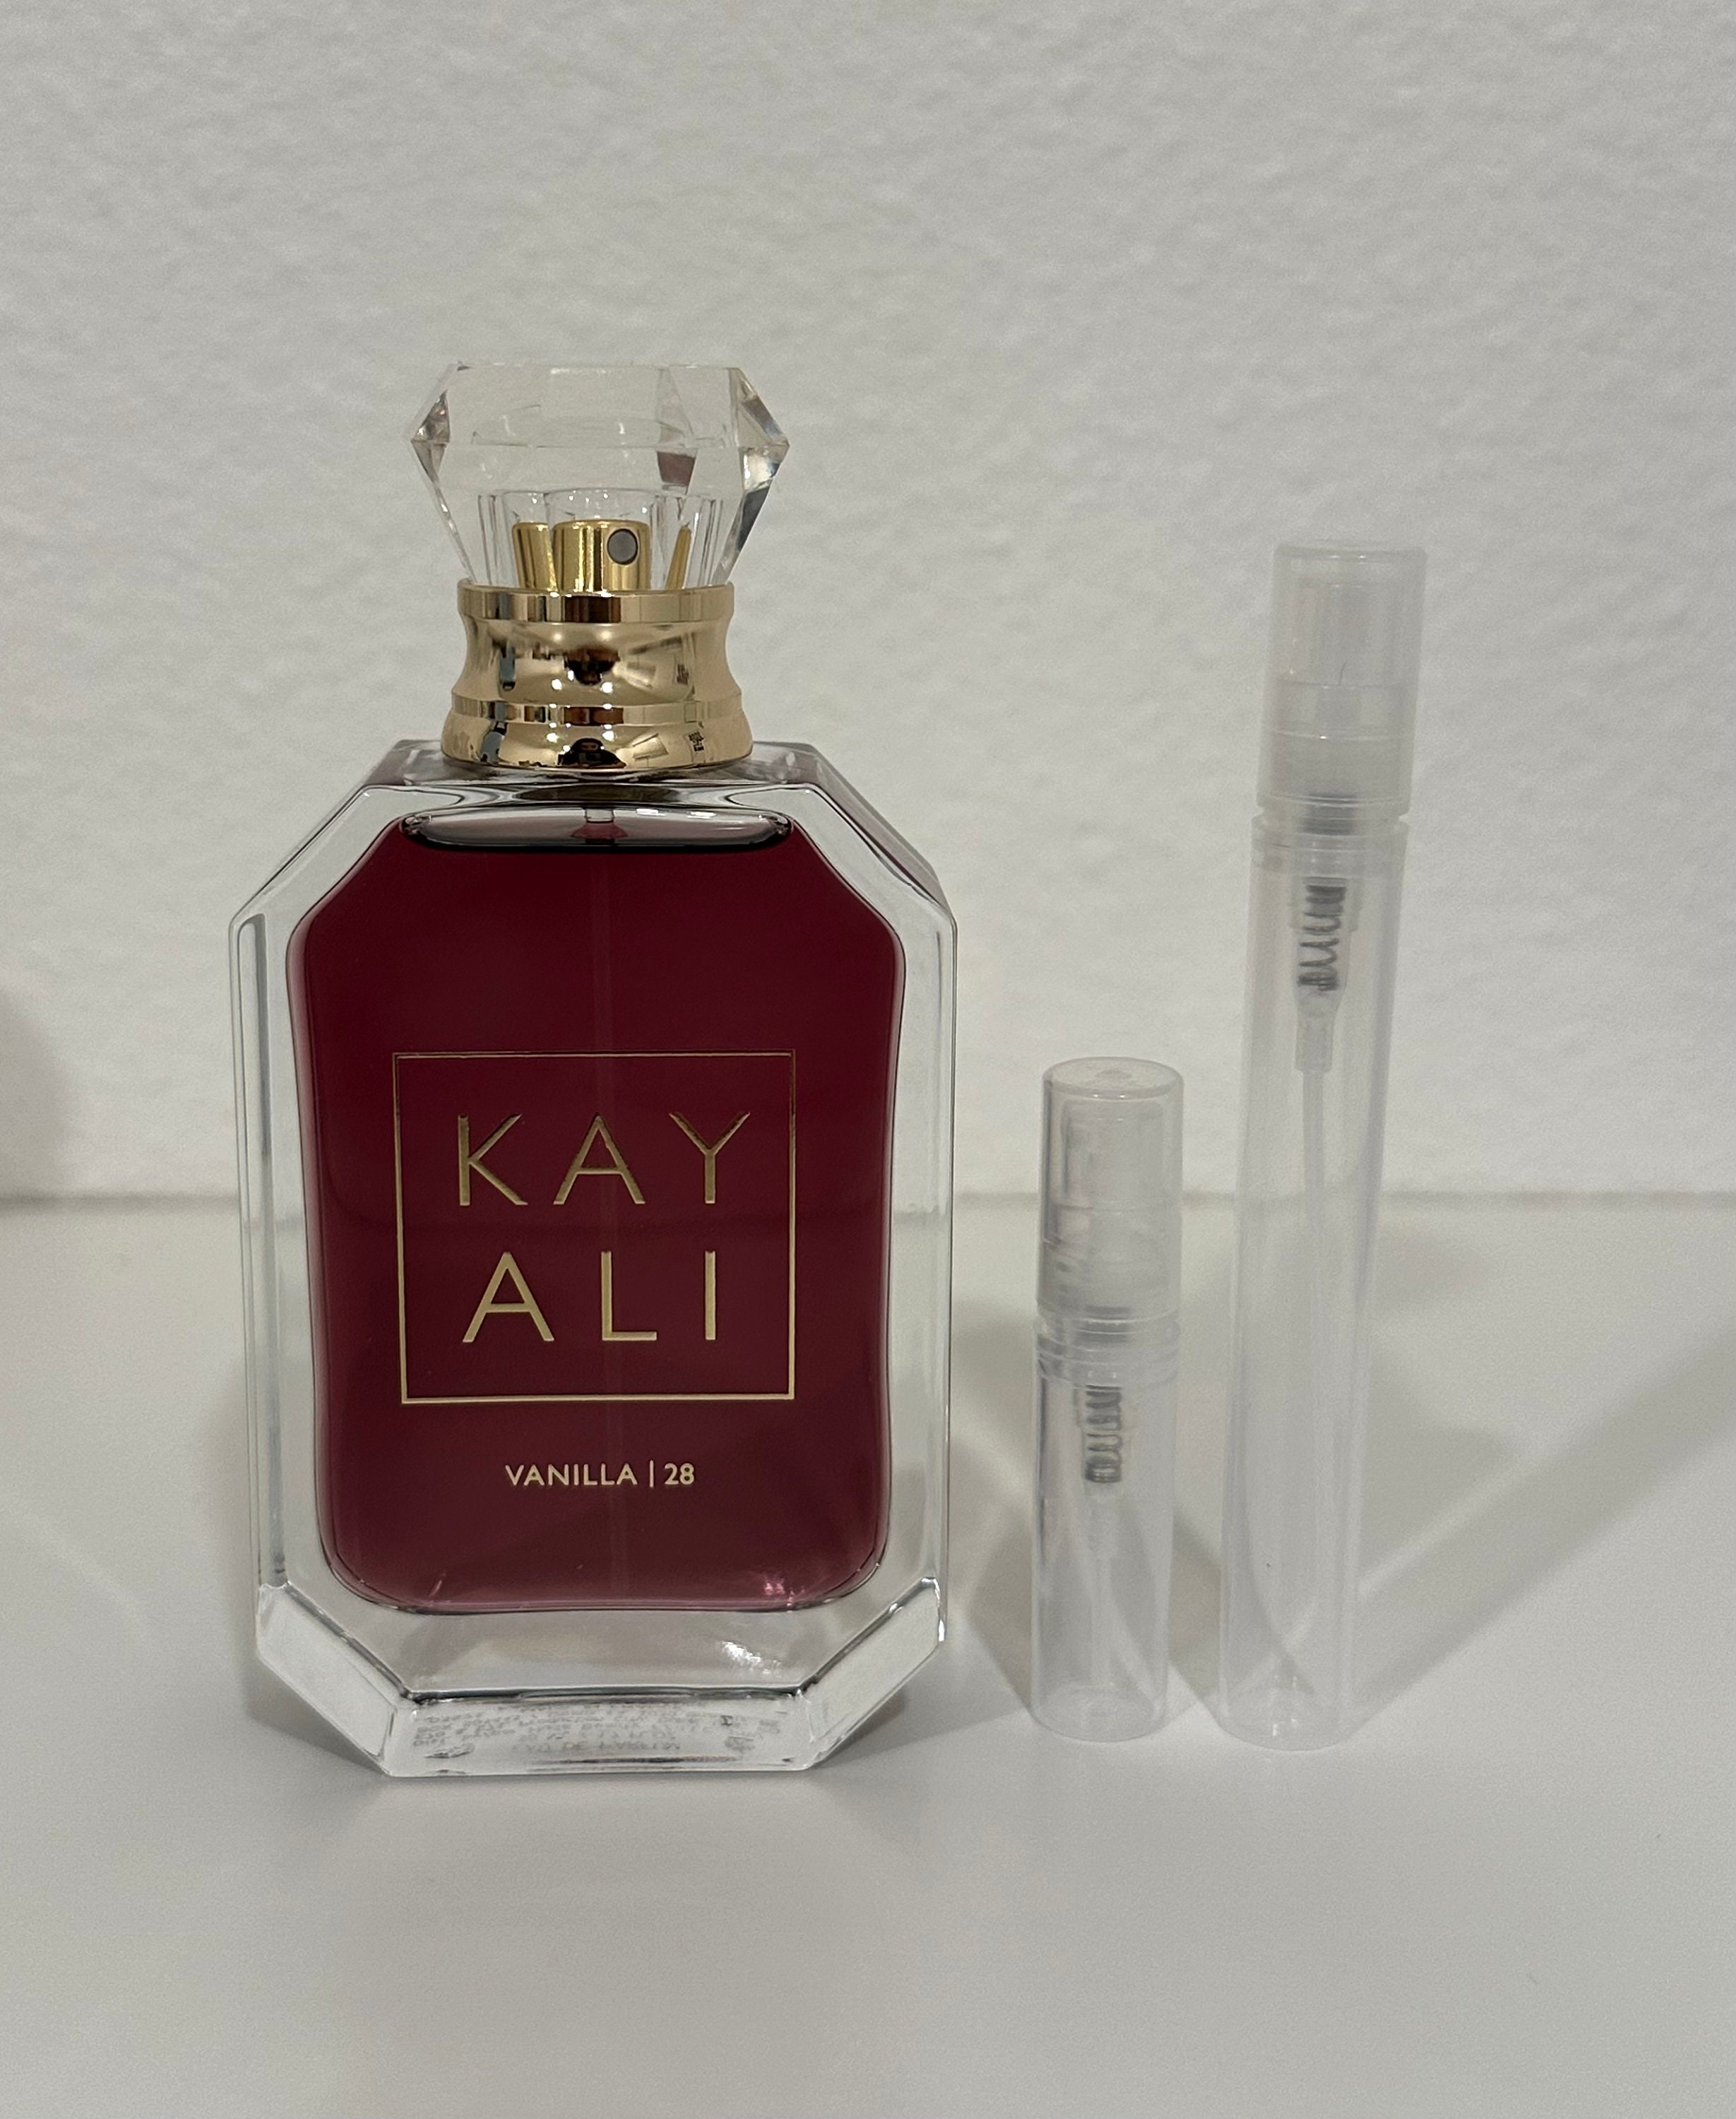 Vanilla 28 Kayali Perfume 2ml 5ml SAMPLE Travel Spray 